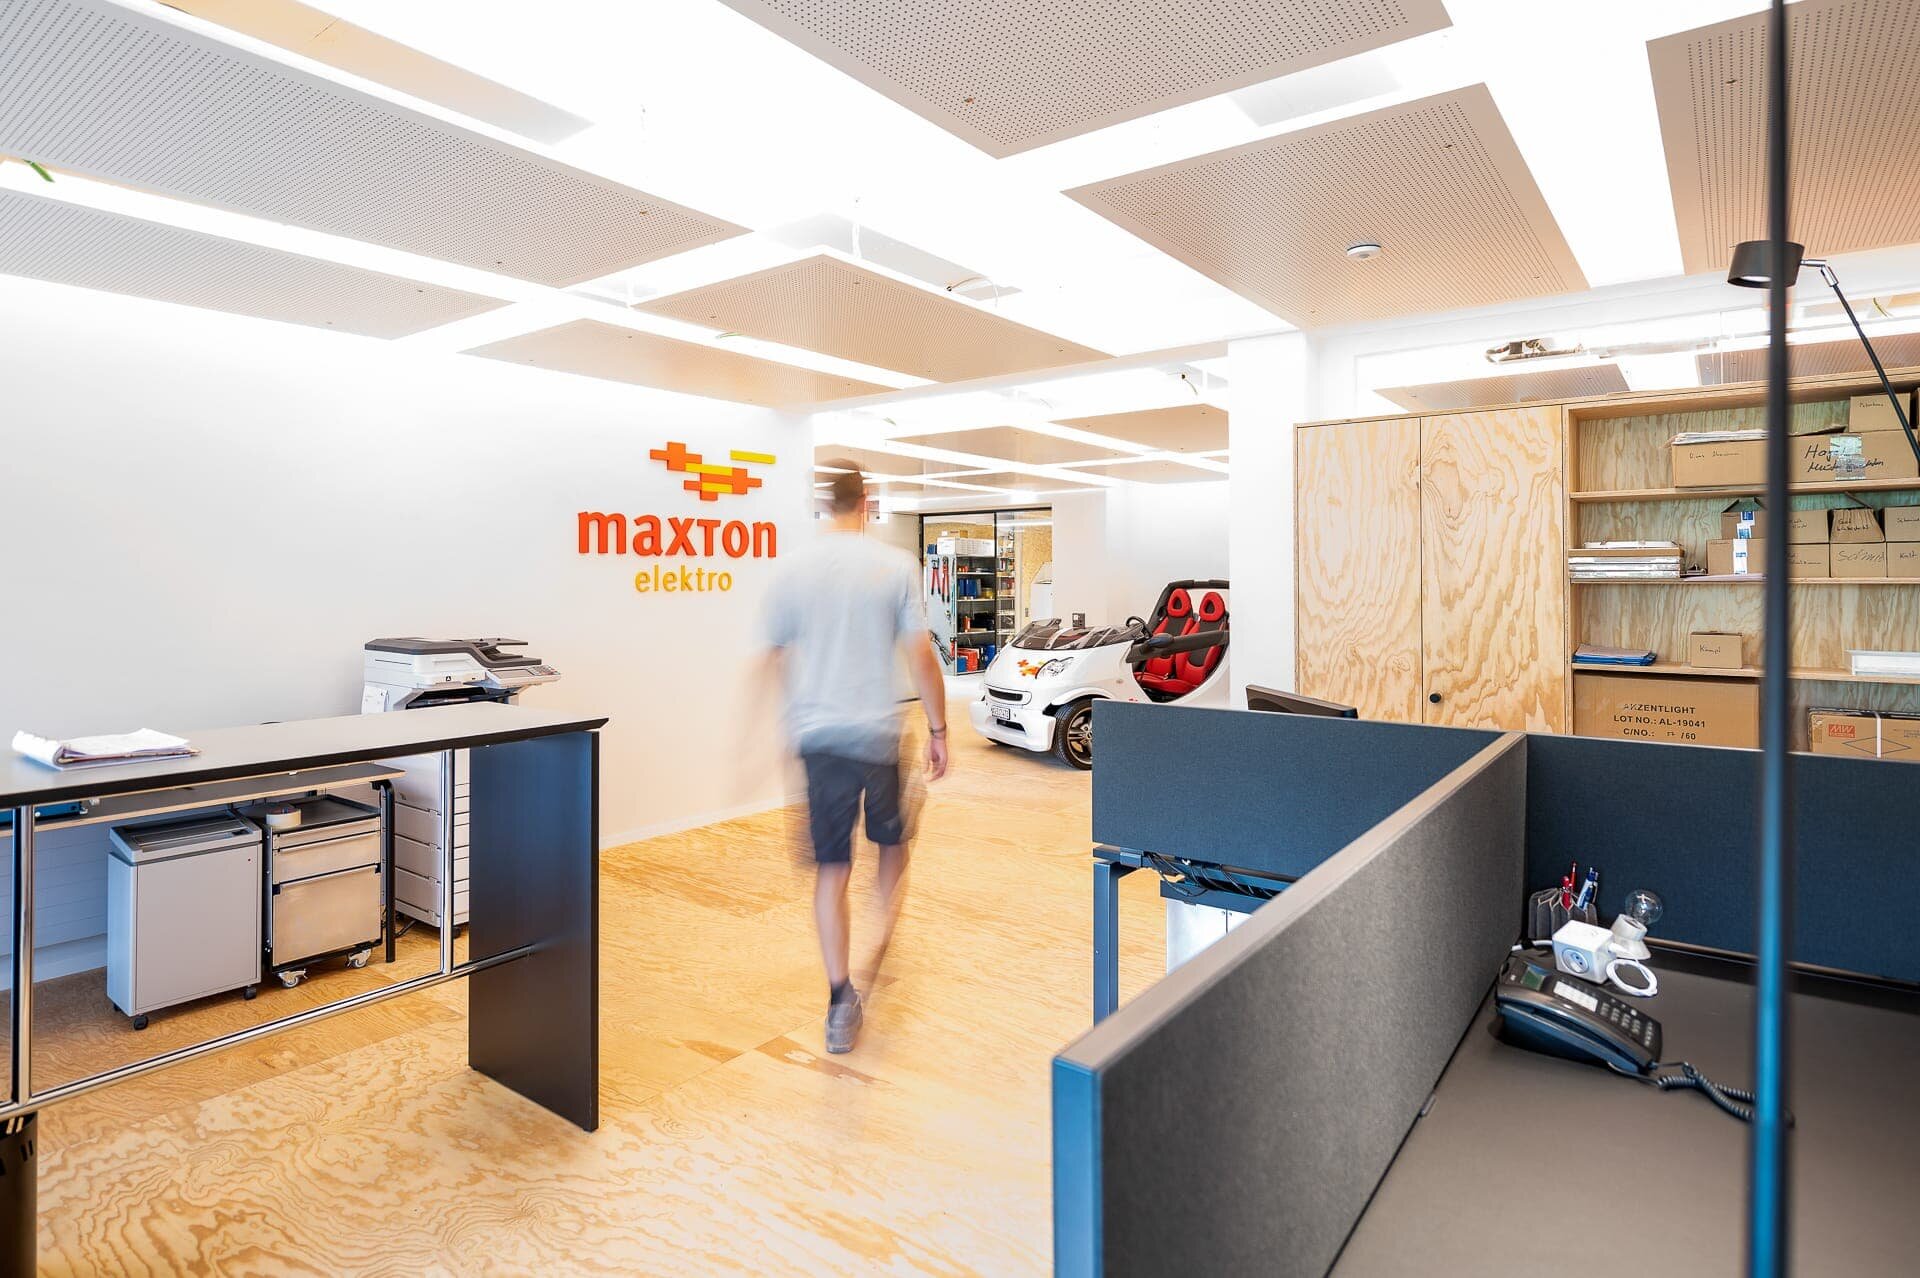 Büros für Maxton AG by Vinval Gestaltung